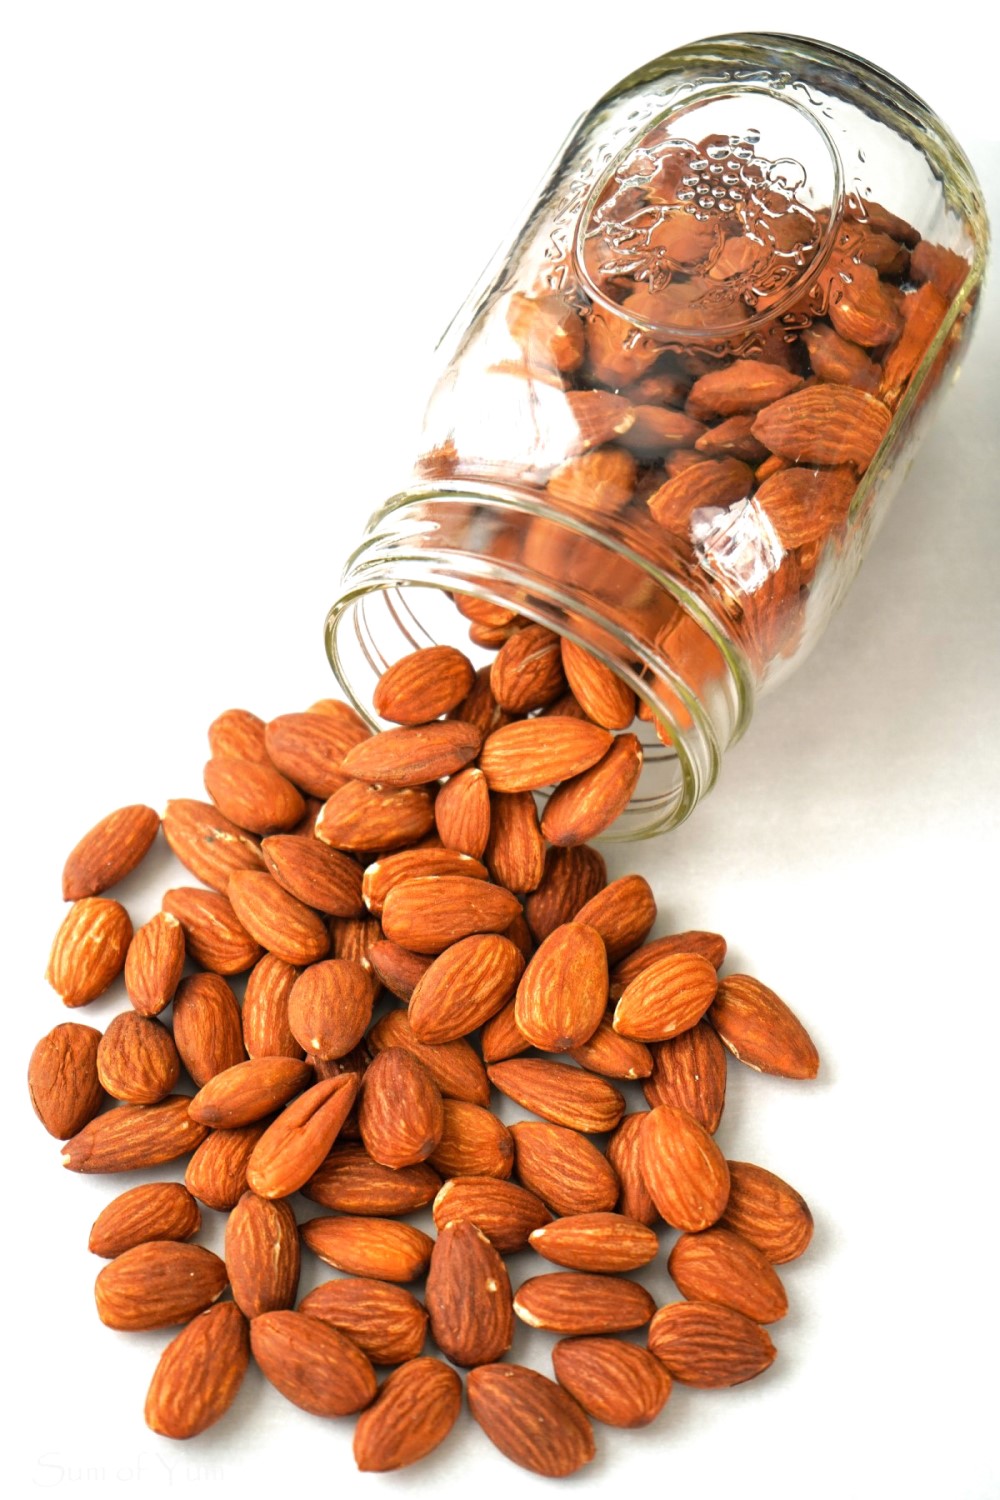 Jar of Roasted Almonds 